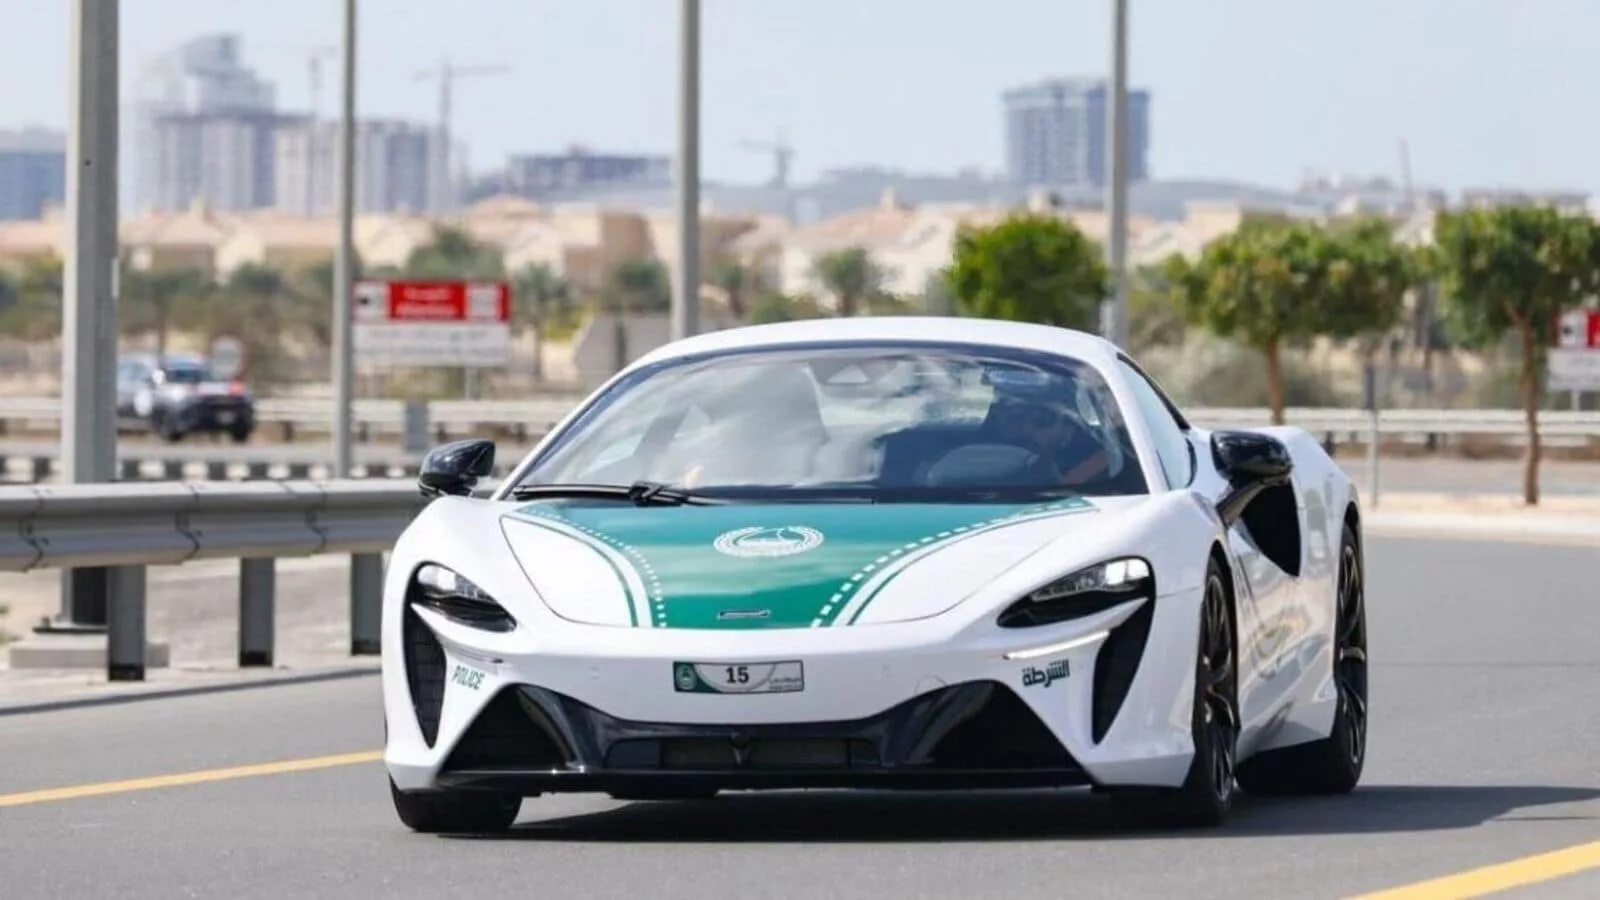 Need for even more speed? Dubai Police adds McLaren Artura to its fleet